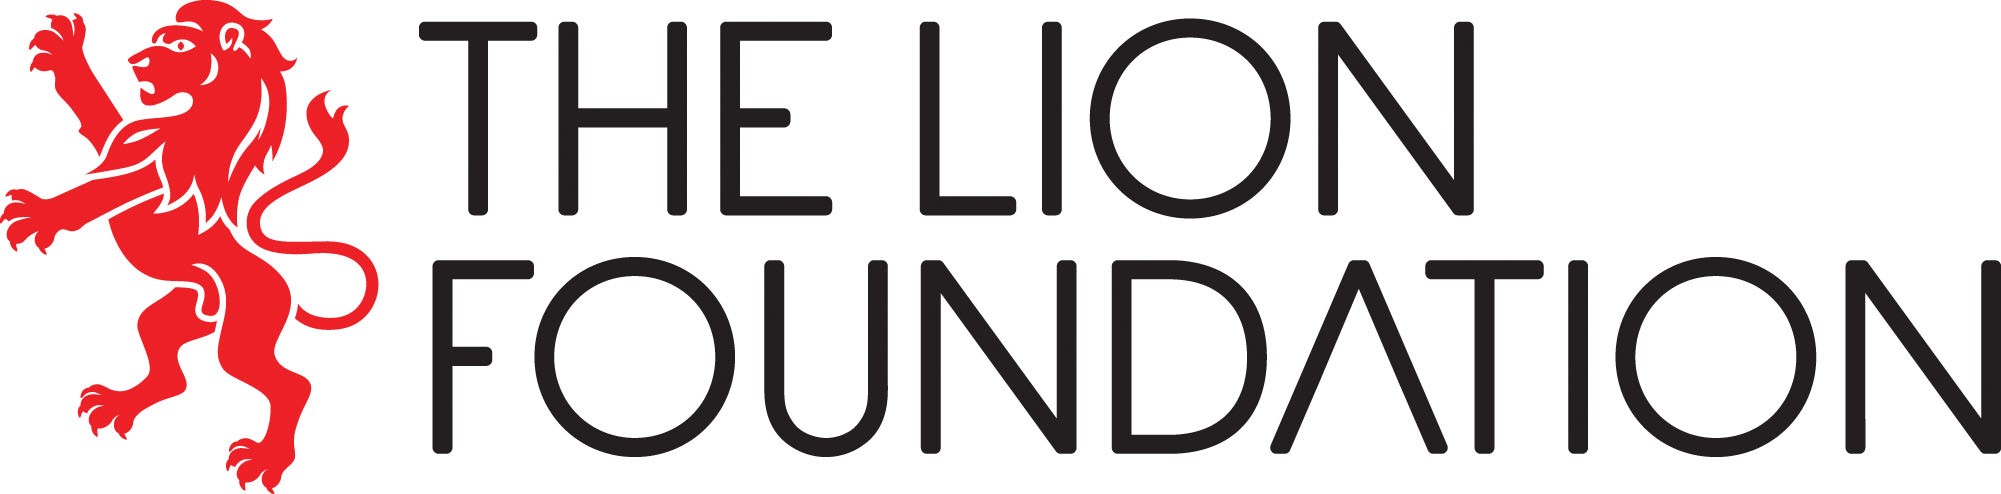 Lion Foundation logo